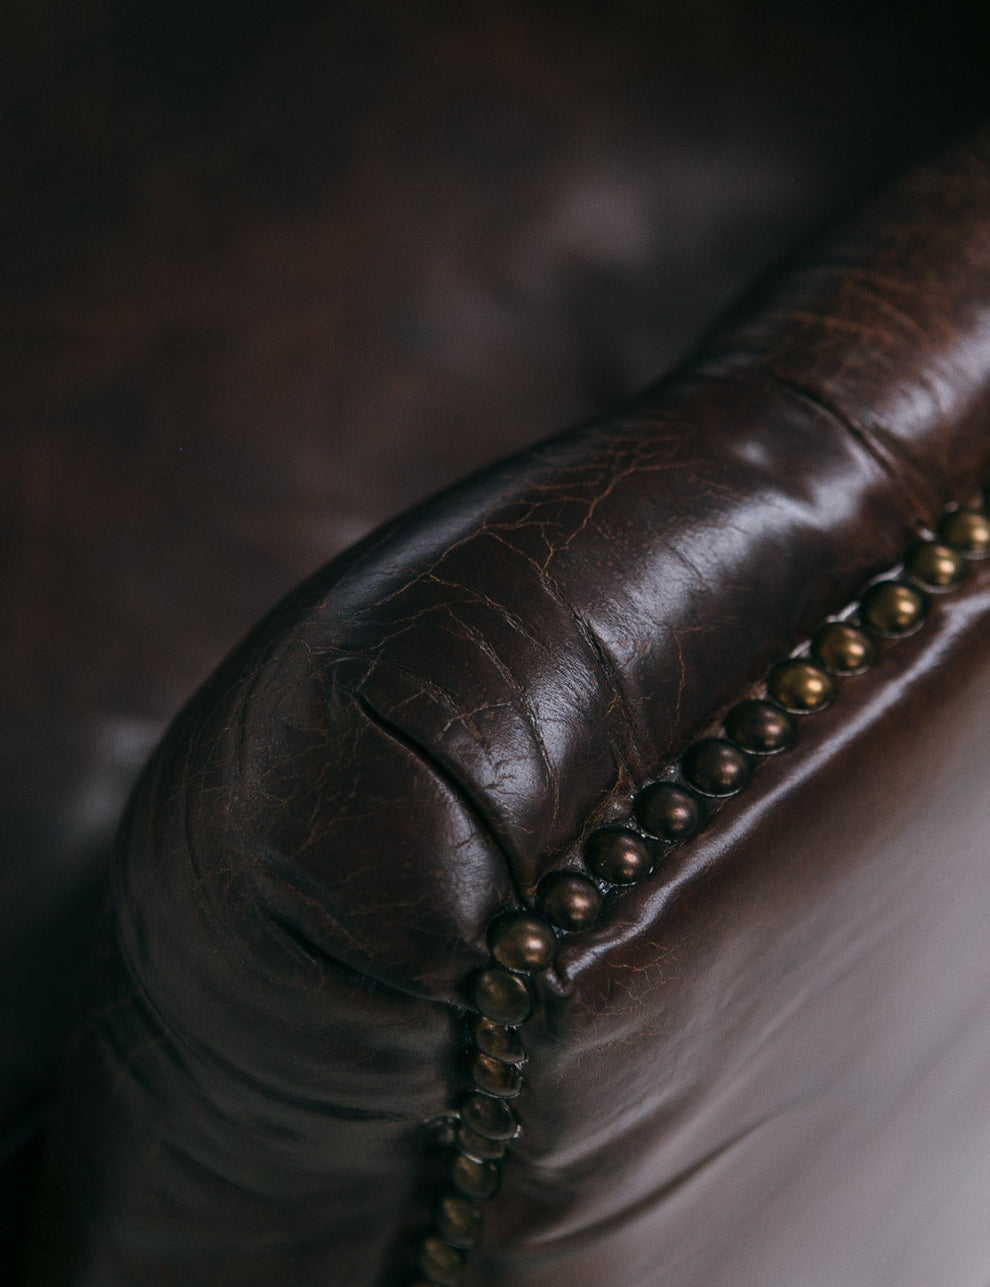 Vintage Leather Button & Stud Sofa close up